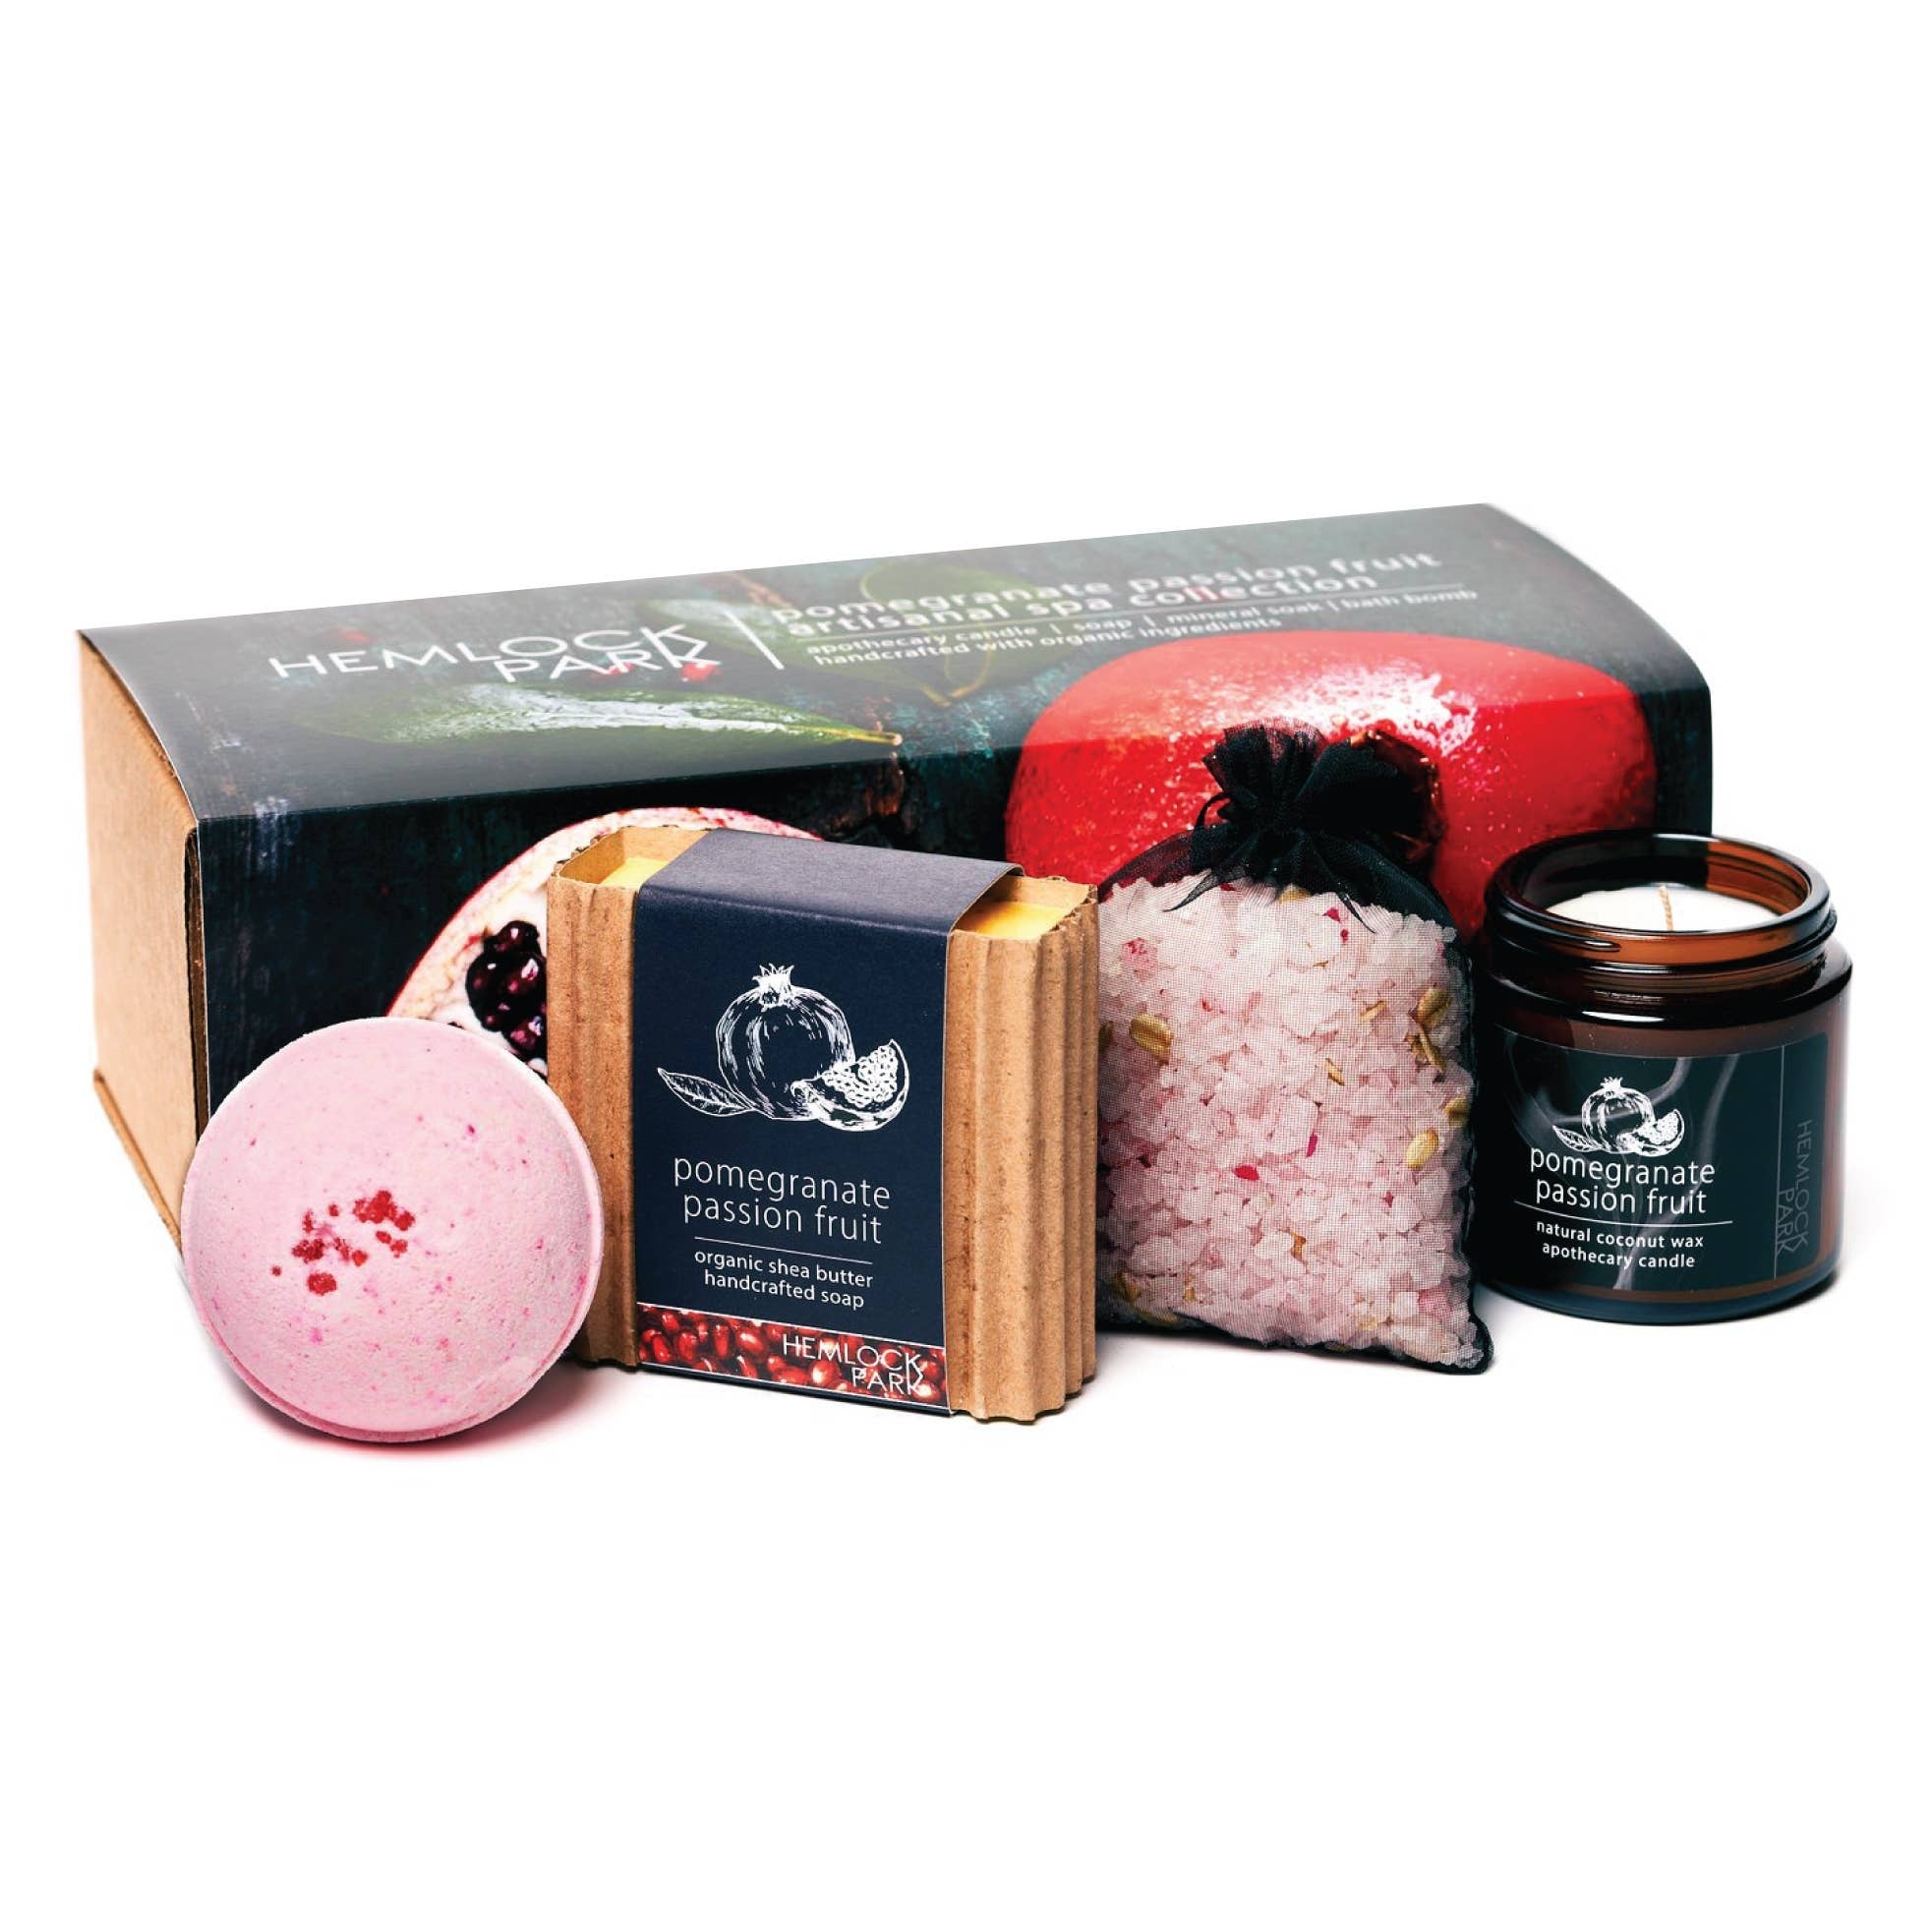 Pomegranate Passion Fruit Spa Gift Box